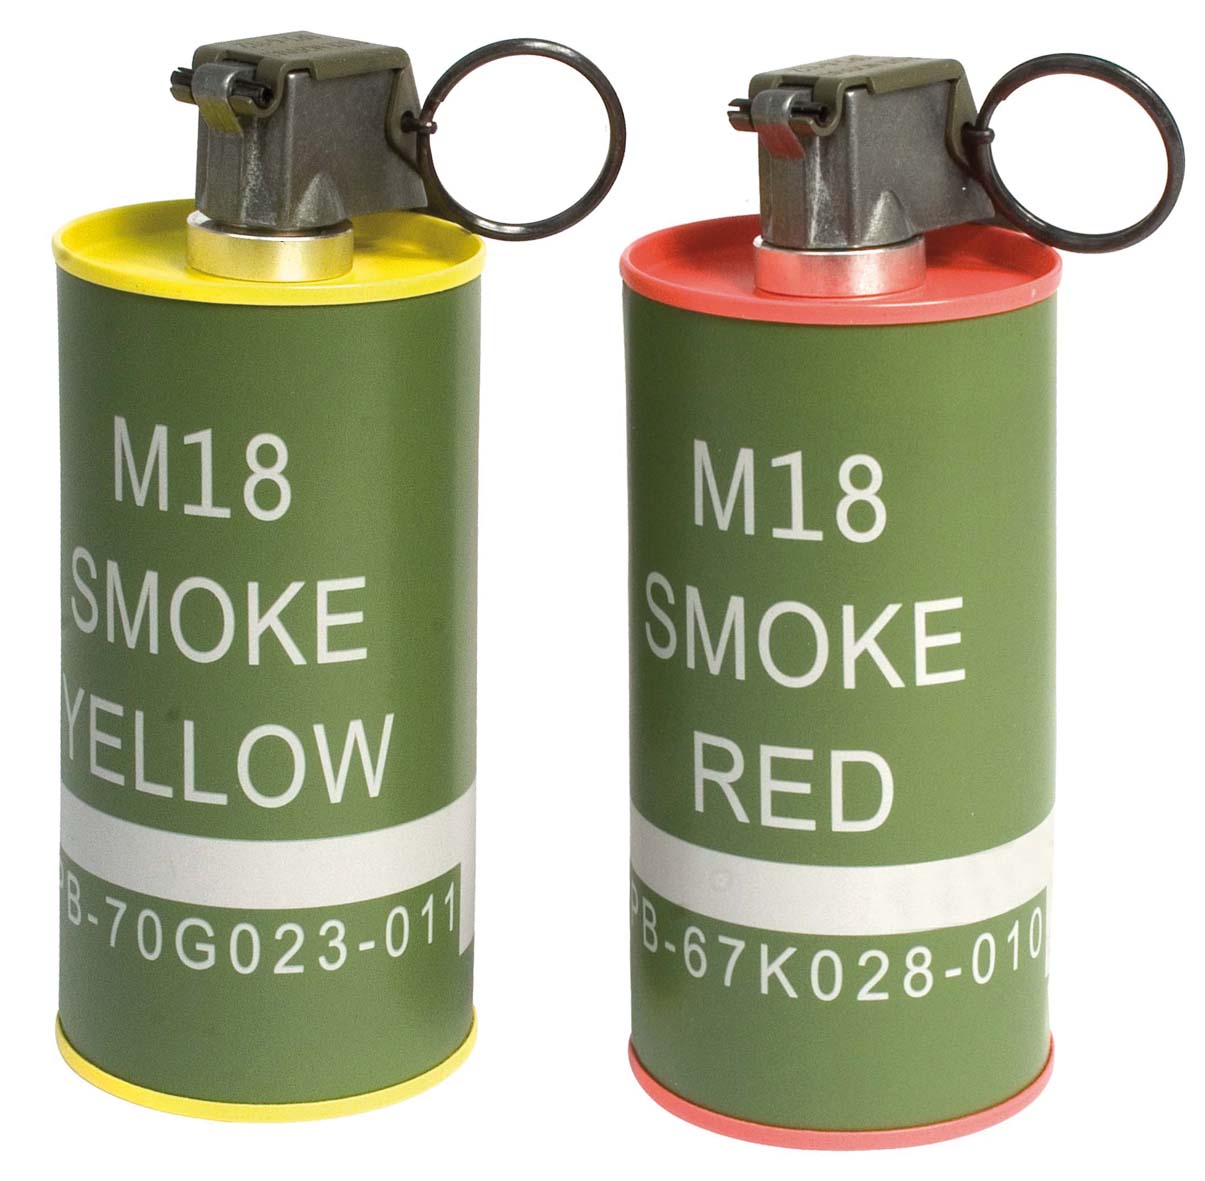 Grenade fumigène M18 G&G